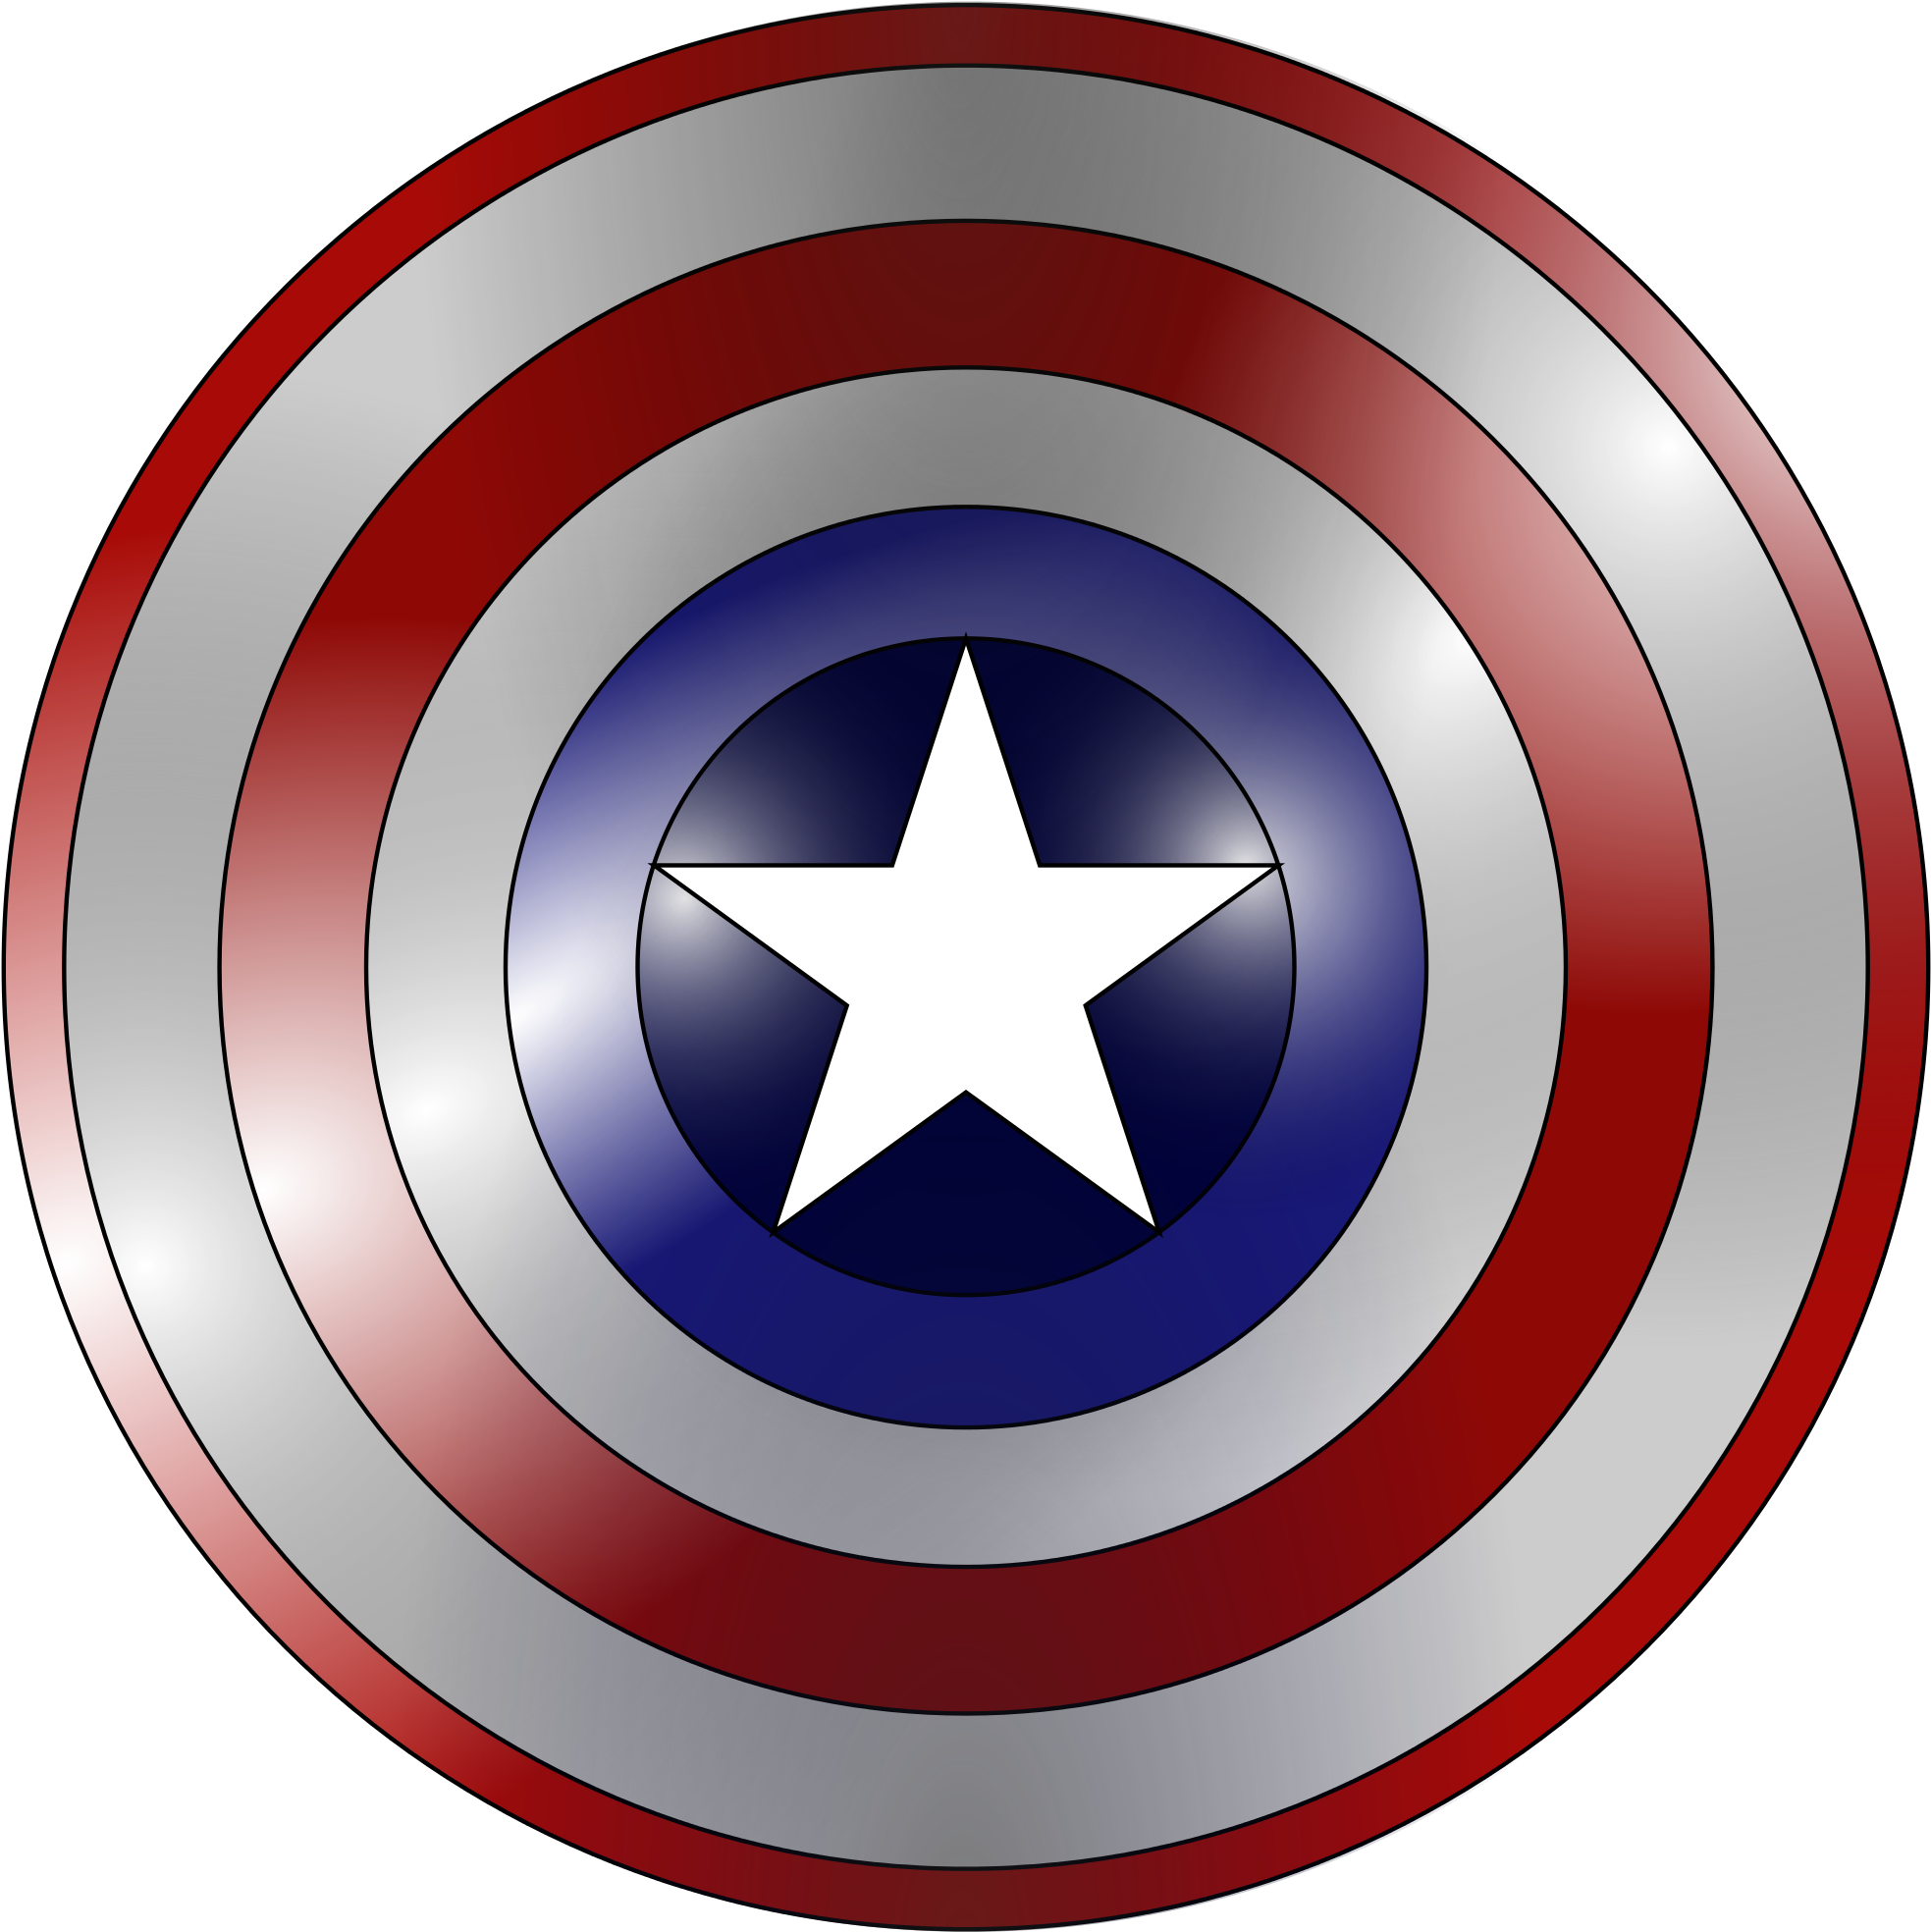 Afficher L'image D'origine - Captain America Shield Pdf (2000x2004)